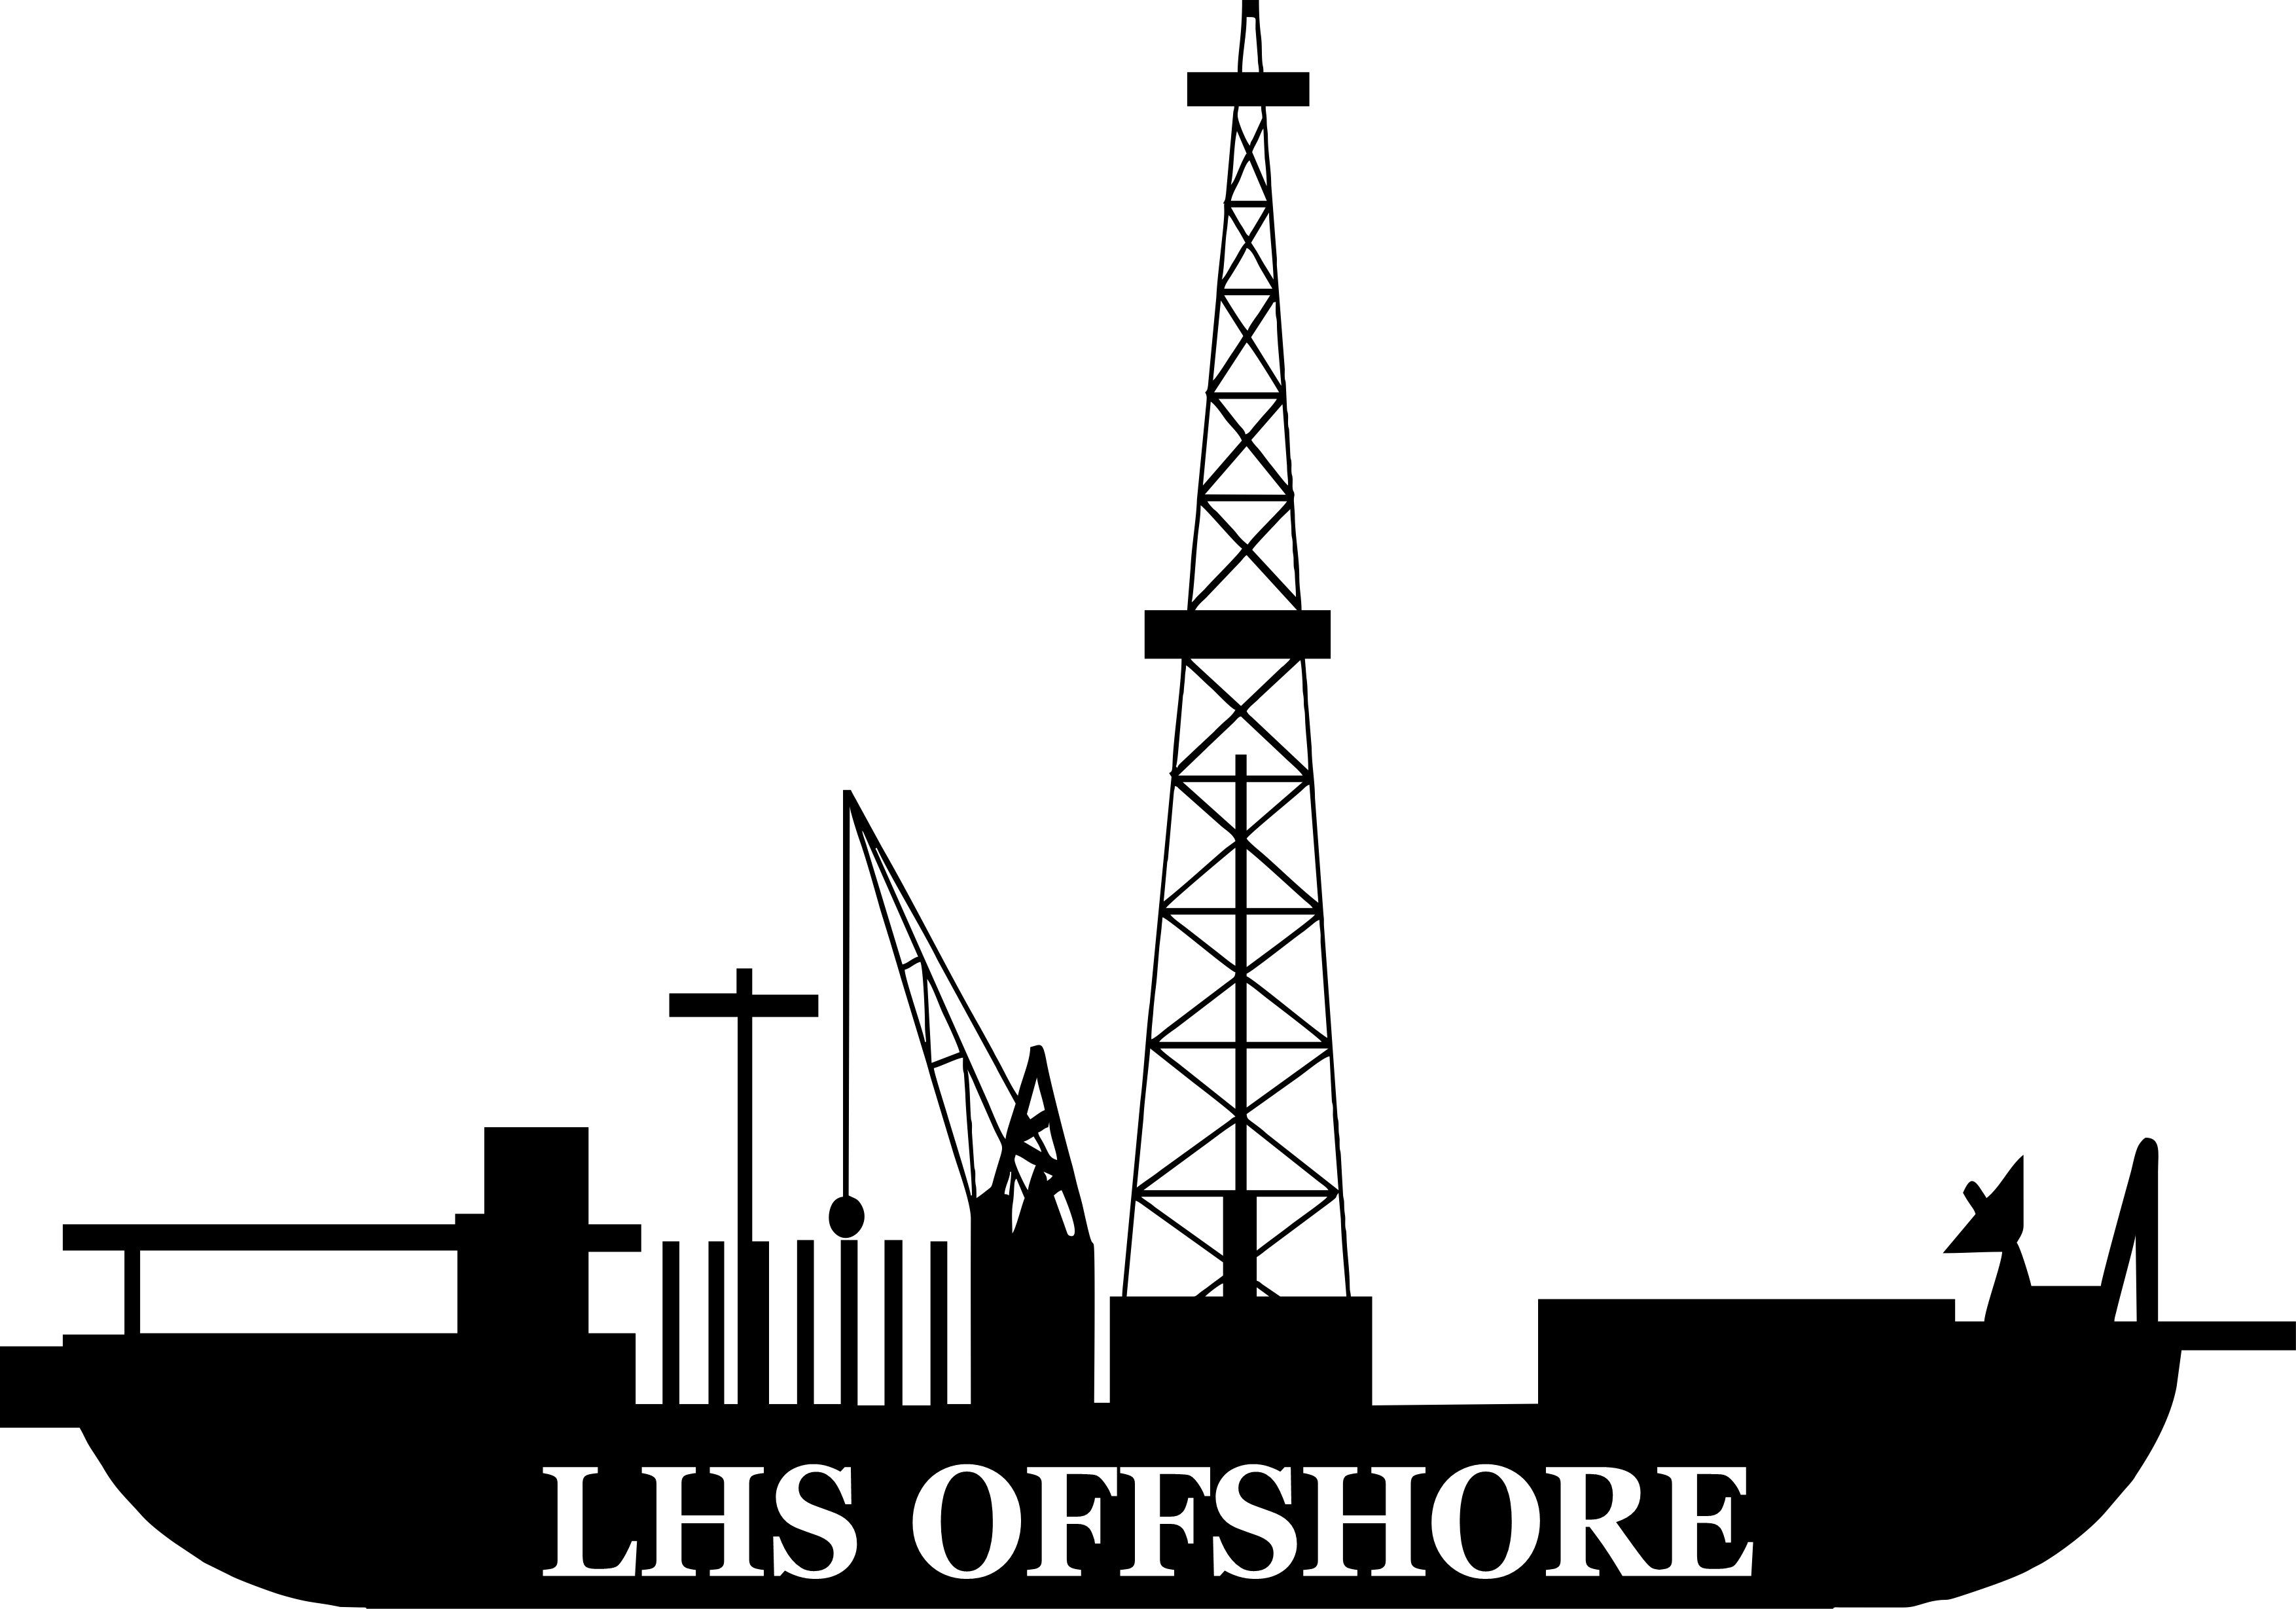 LHS OFFSHORE